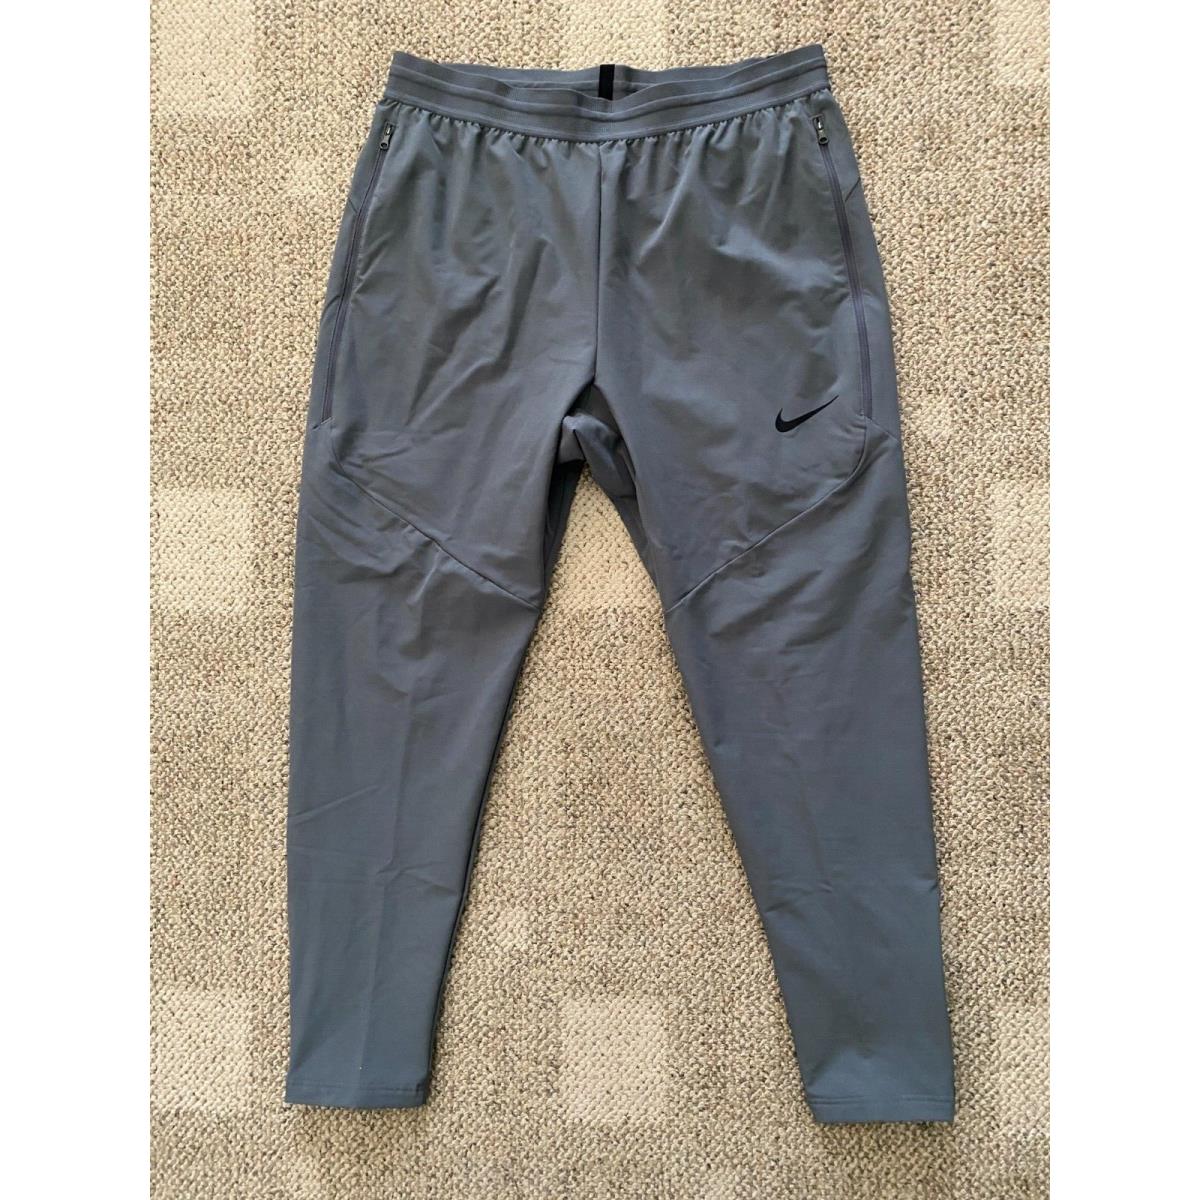 Men`s Xxl 2XL Nike Pro Fleece Lined Training Athletic Pants Gray CU7351-068